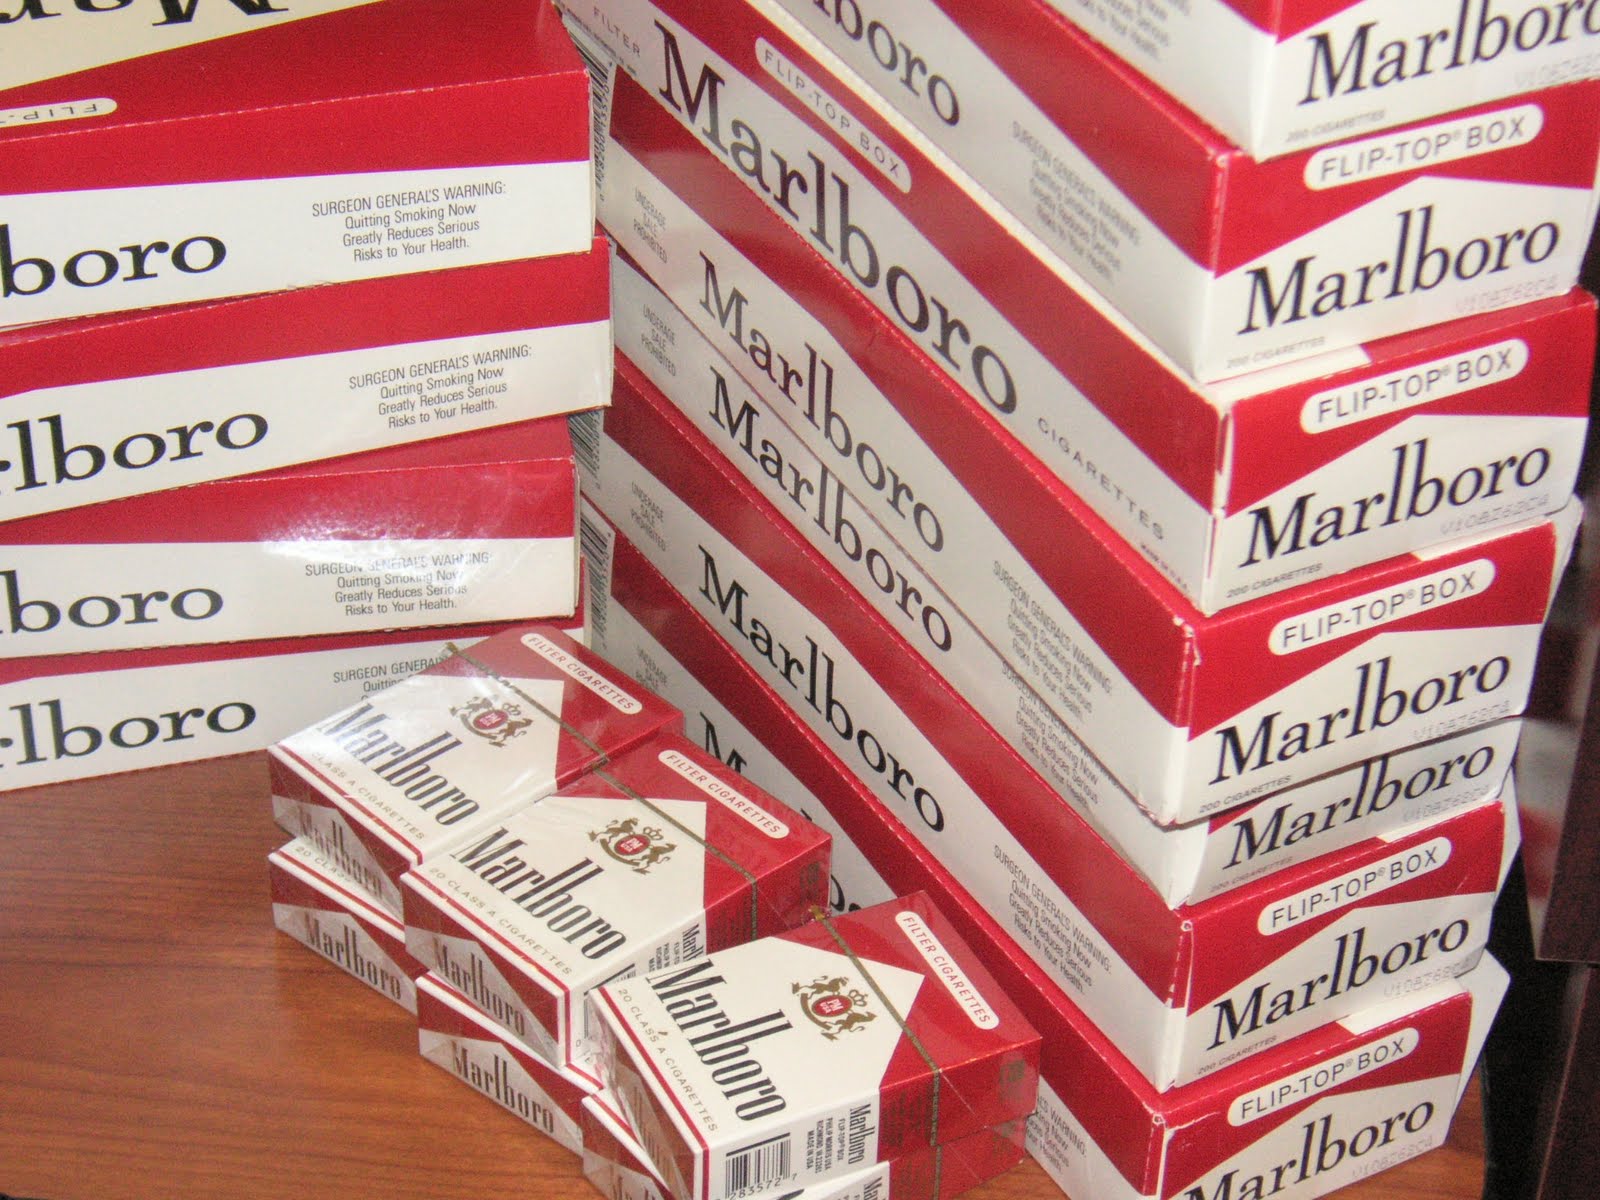 Dunhill, Newport, Marlboro - buy best cigarettes brands